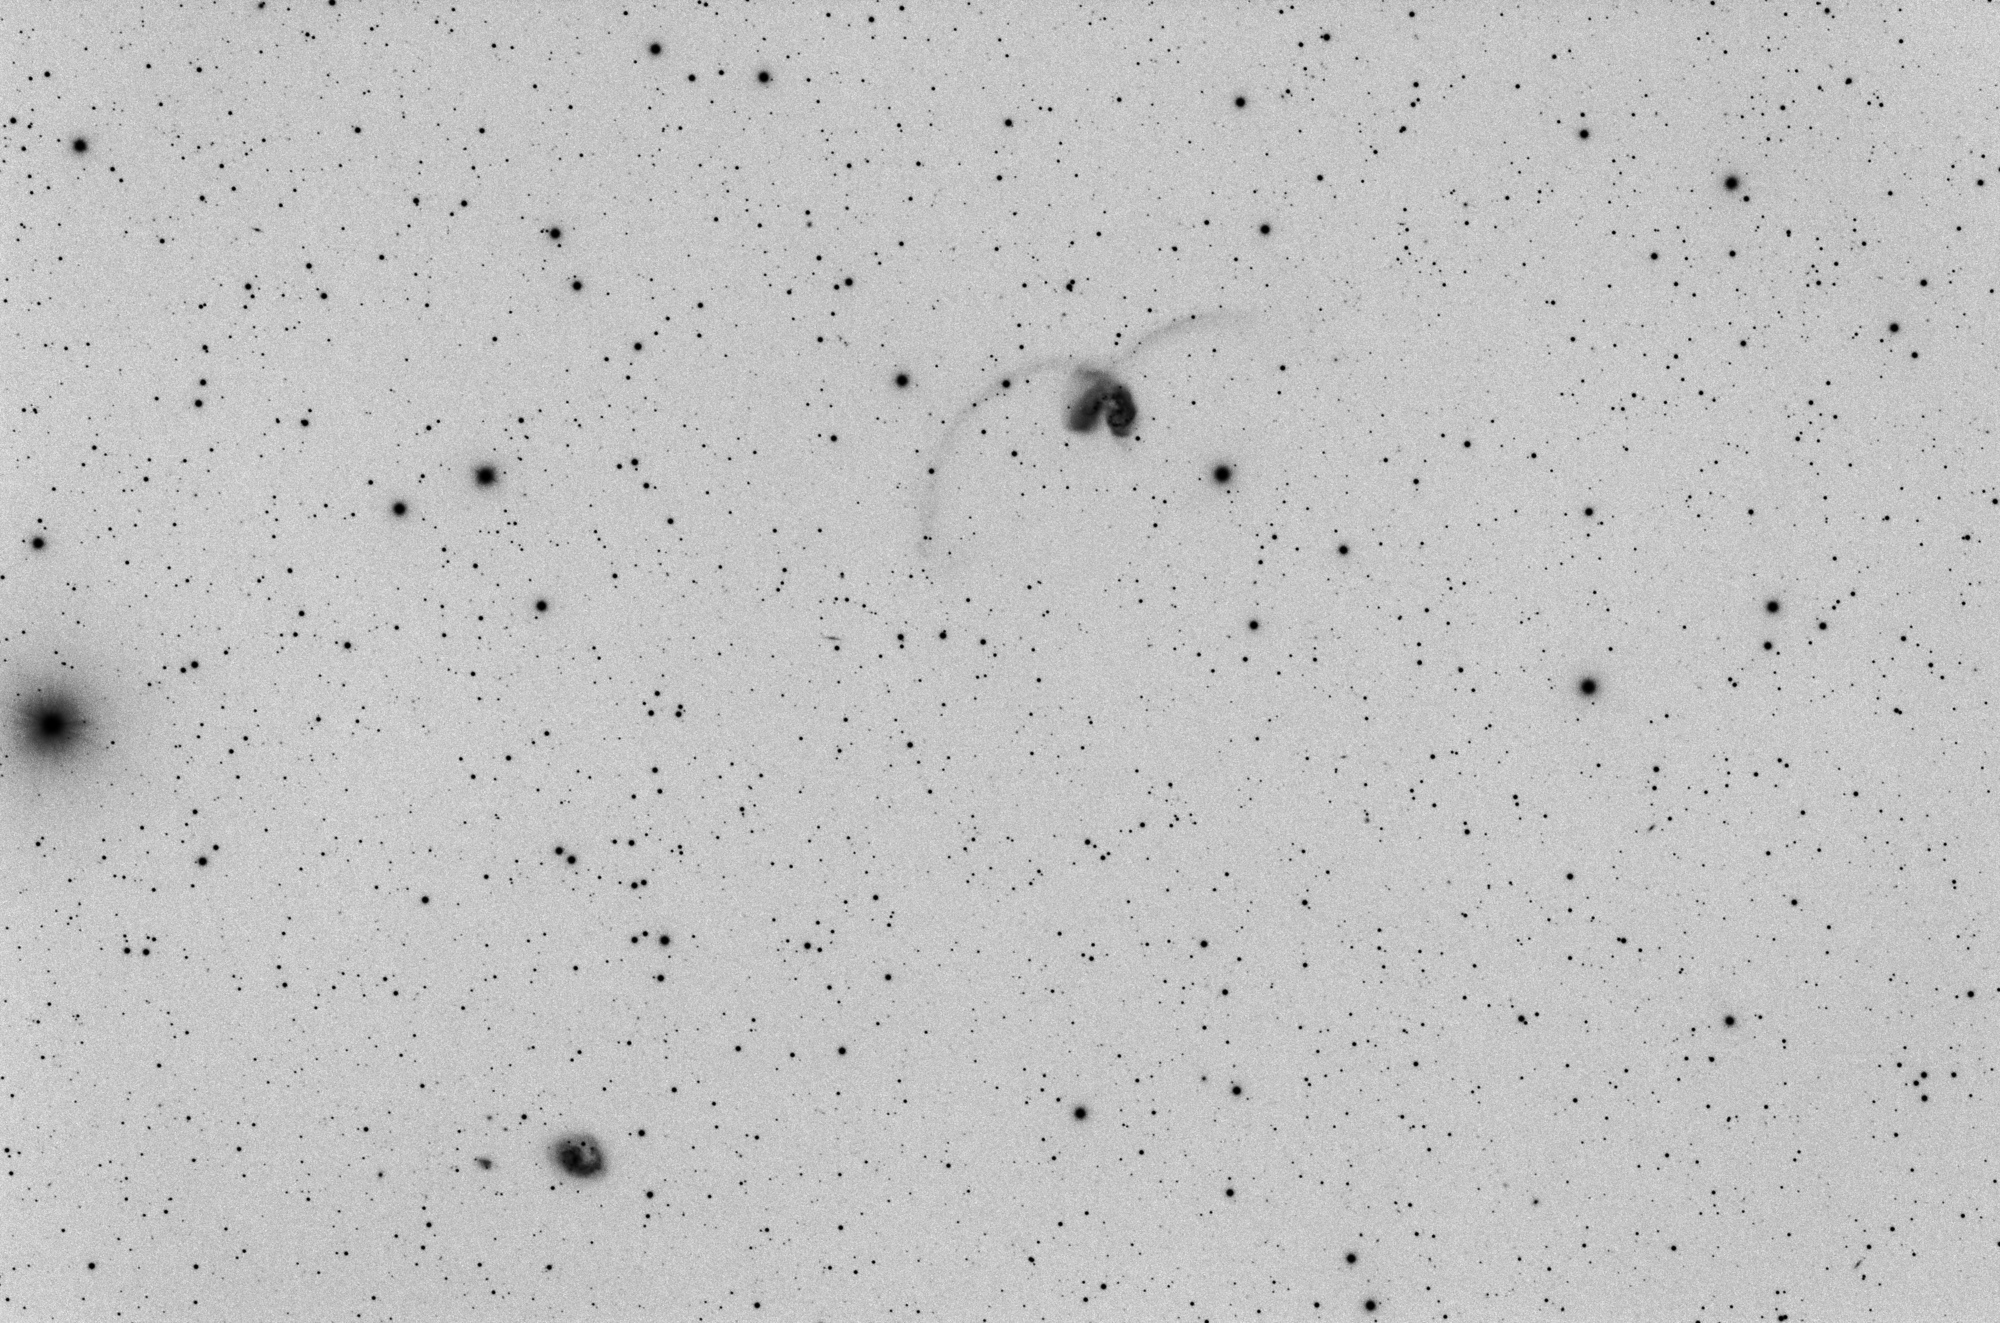 NGC 4038_SIRIL-1+4-iris-2-cs5-B-FINAL-3n.jpg